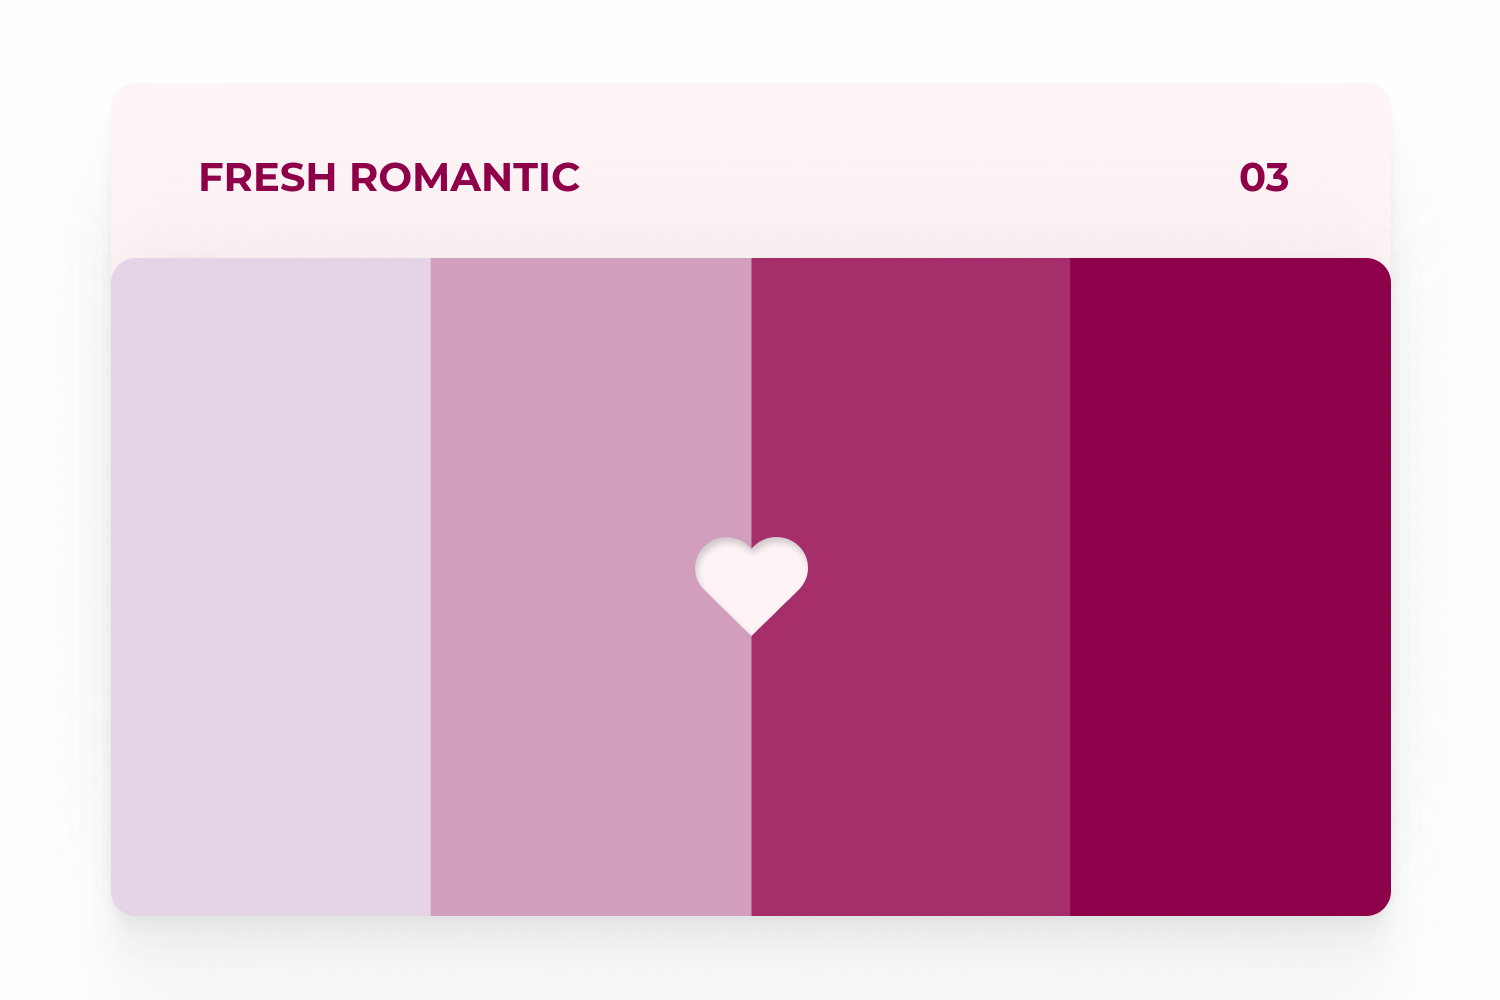 Fresh romantic color palette pinks, purple, red.